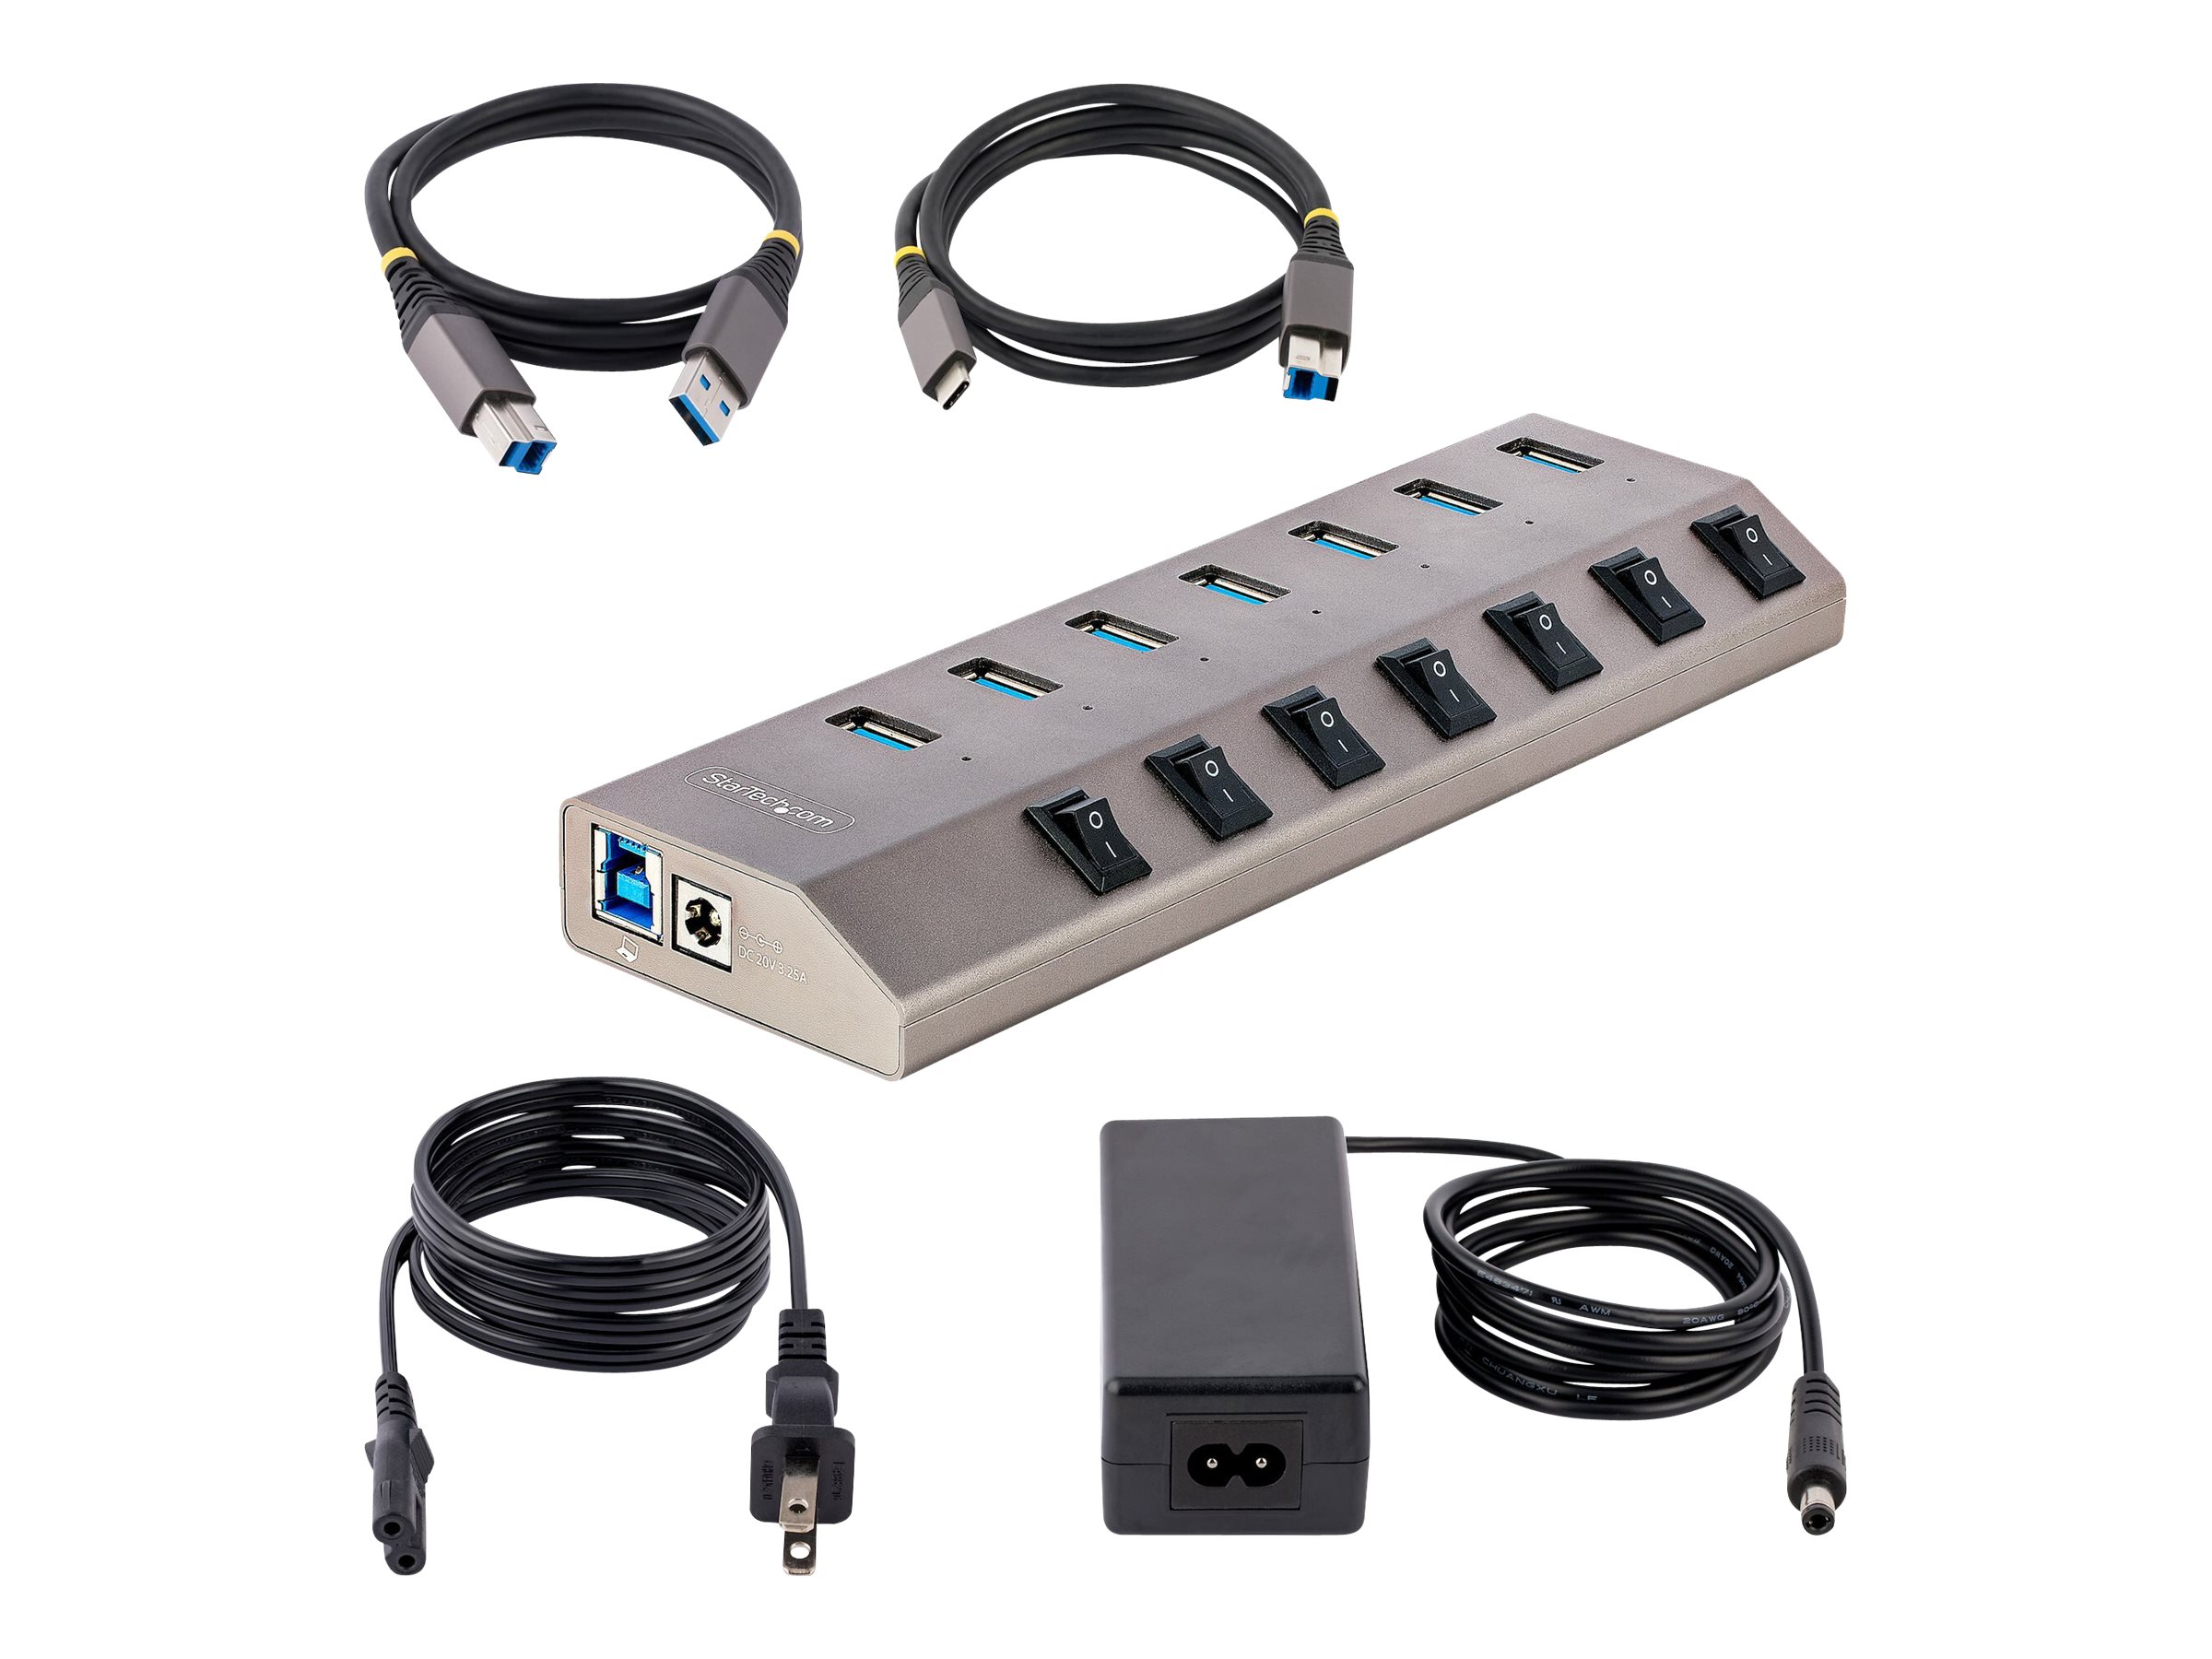 Startech : 10-PORT USB-C HUB SELF-POWERED DESKTOP/LAPTOP EXPANSION HUB